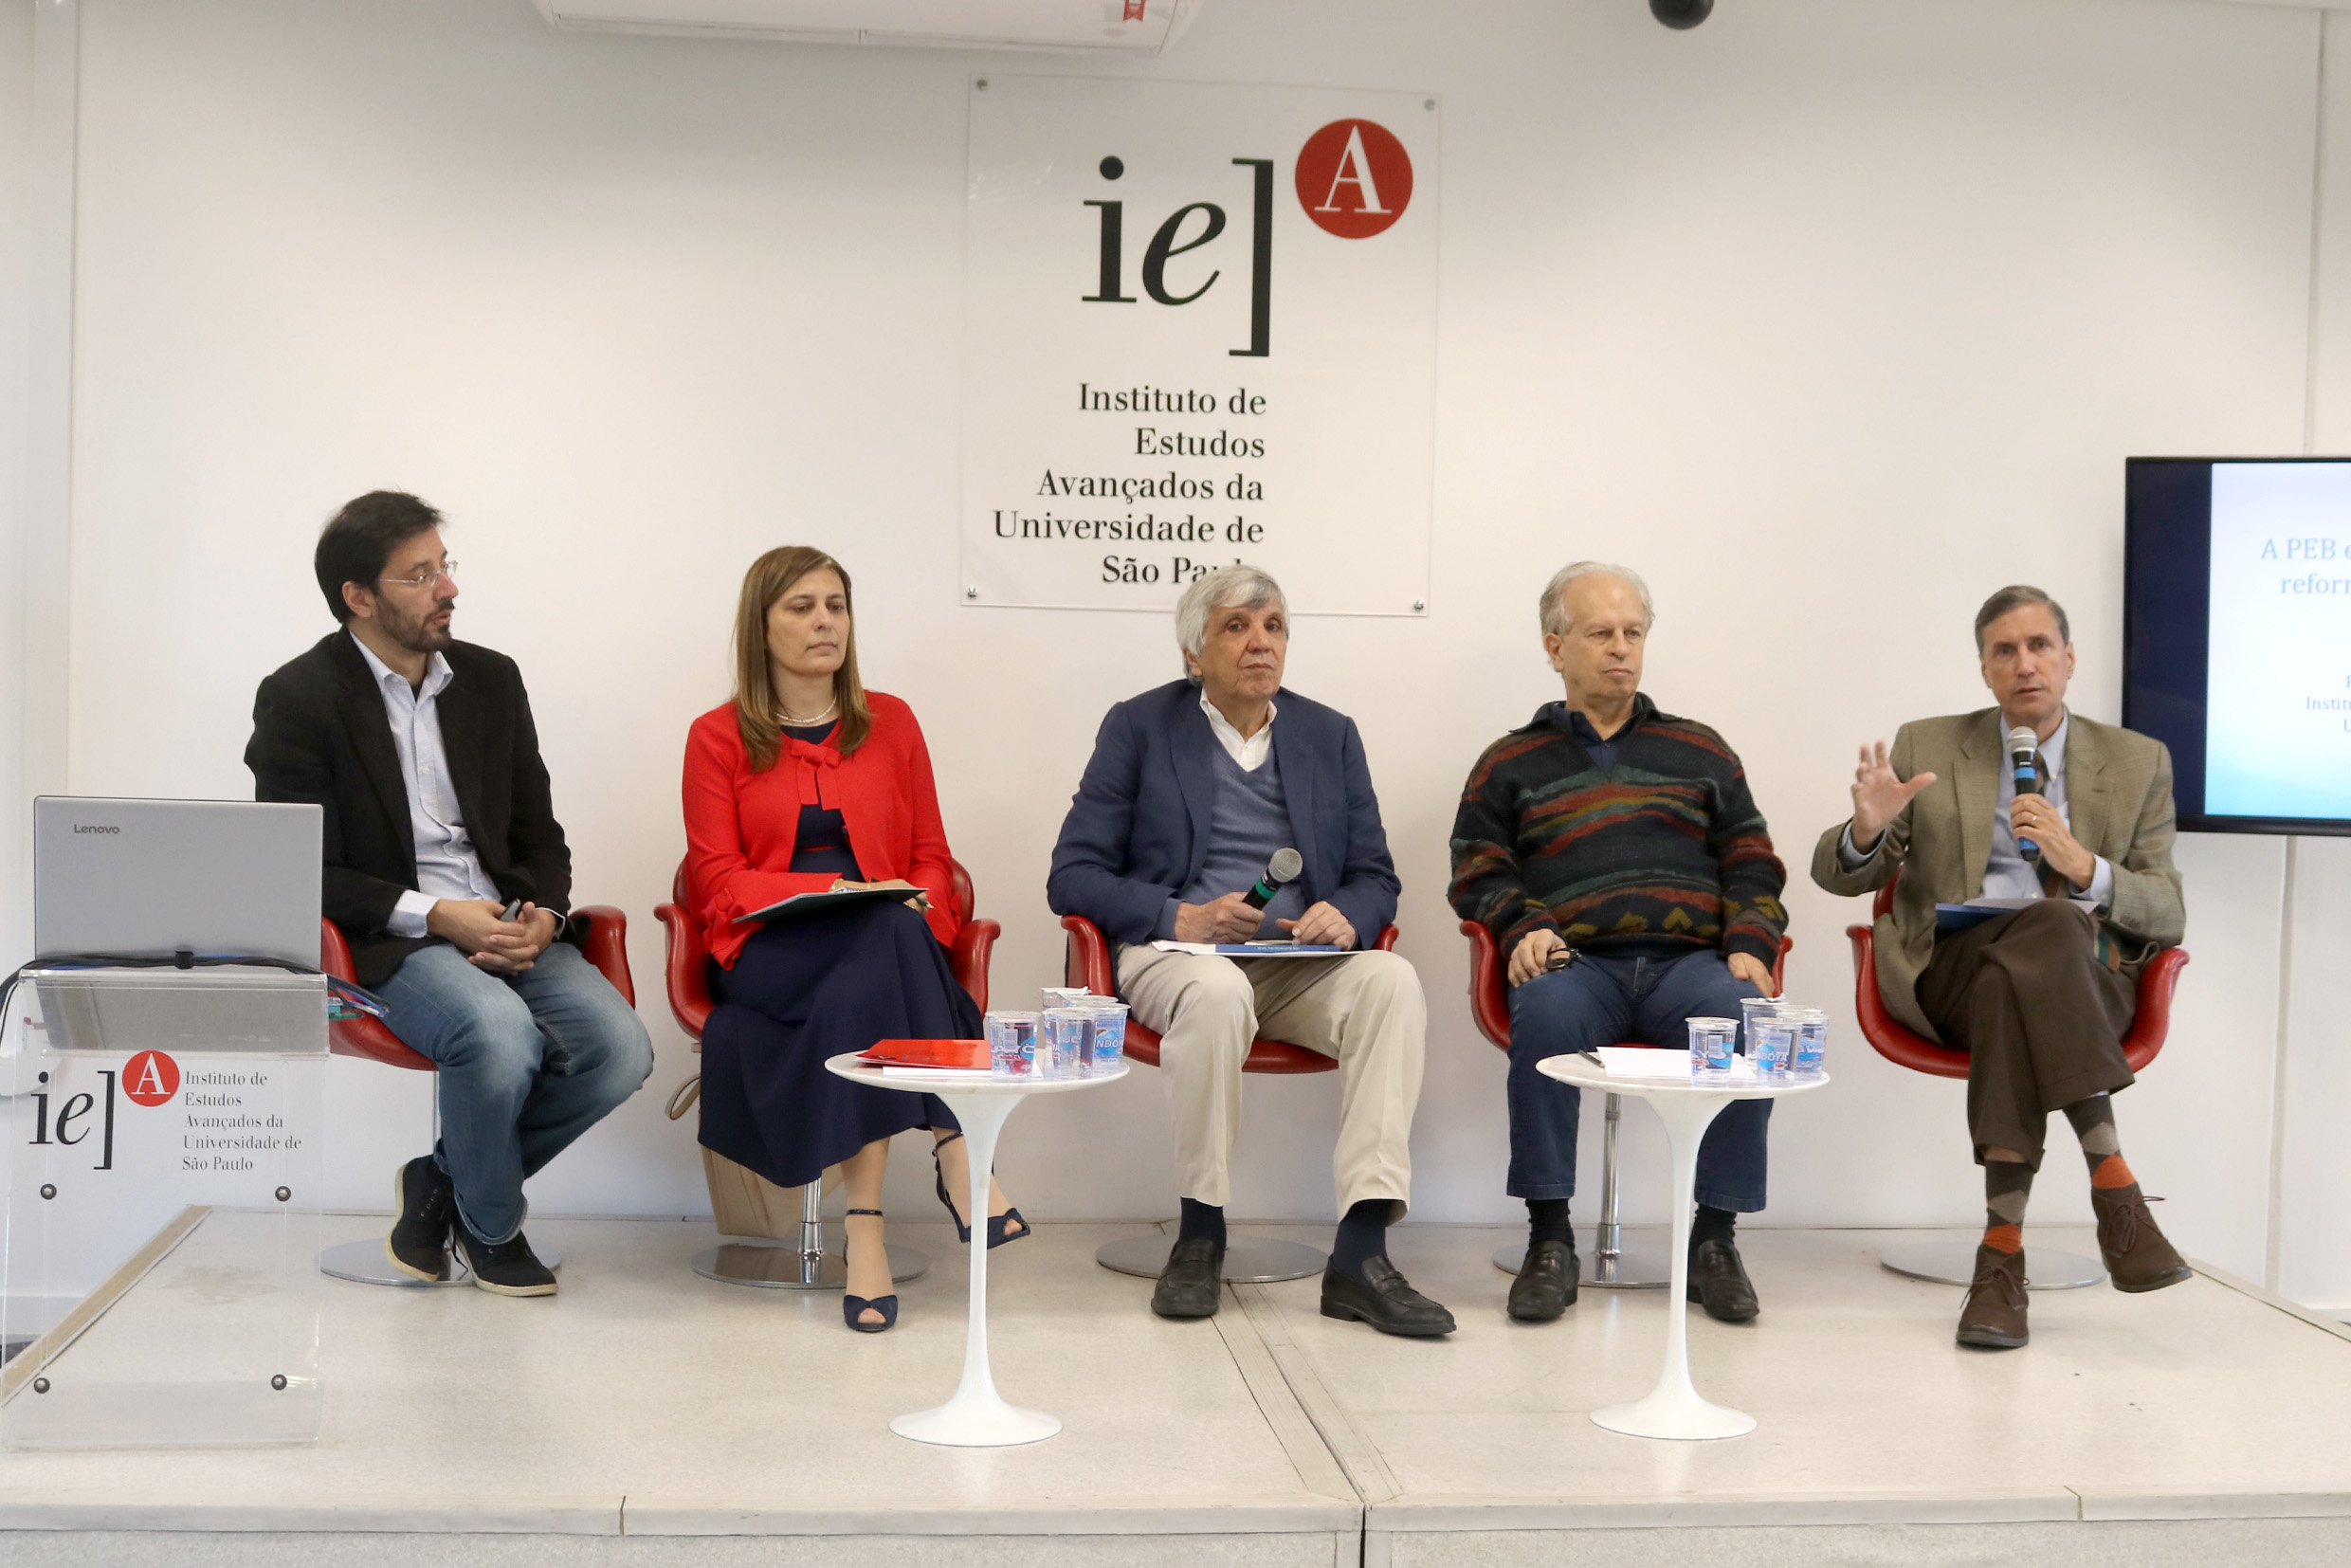 Feliciano Guimarães, Isabel Valente, Álvaro de Vasconcelos , Renato Janine Ribeiro e pedro Dallari